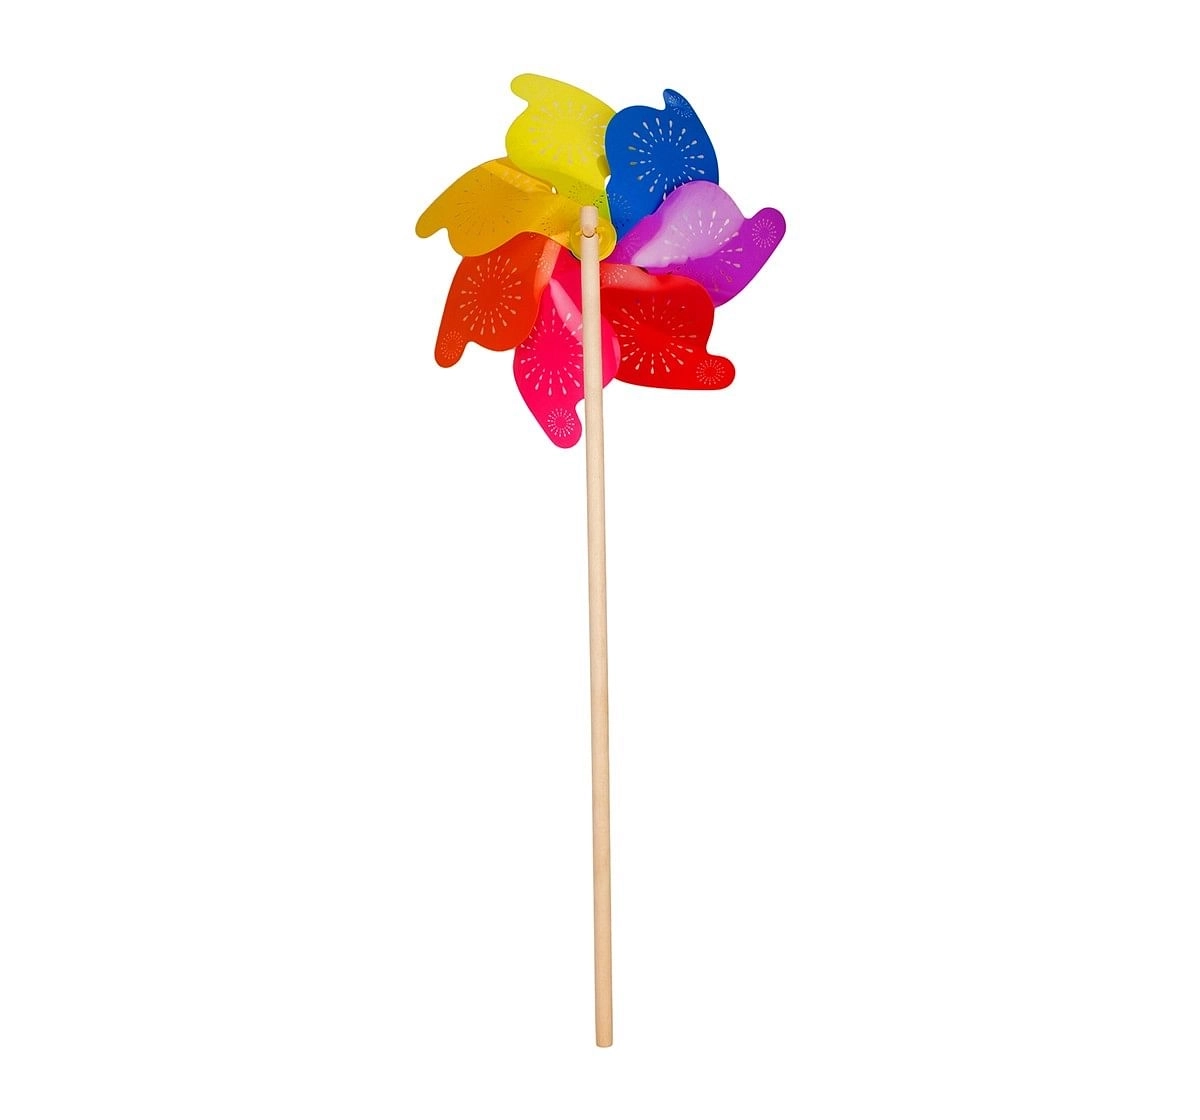 Karma Wooden Cutwork Windmill Impulse Toys for Kids age 3Y+ 